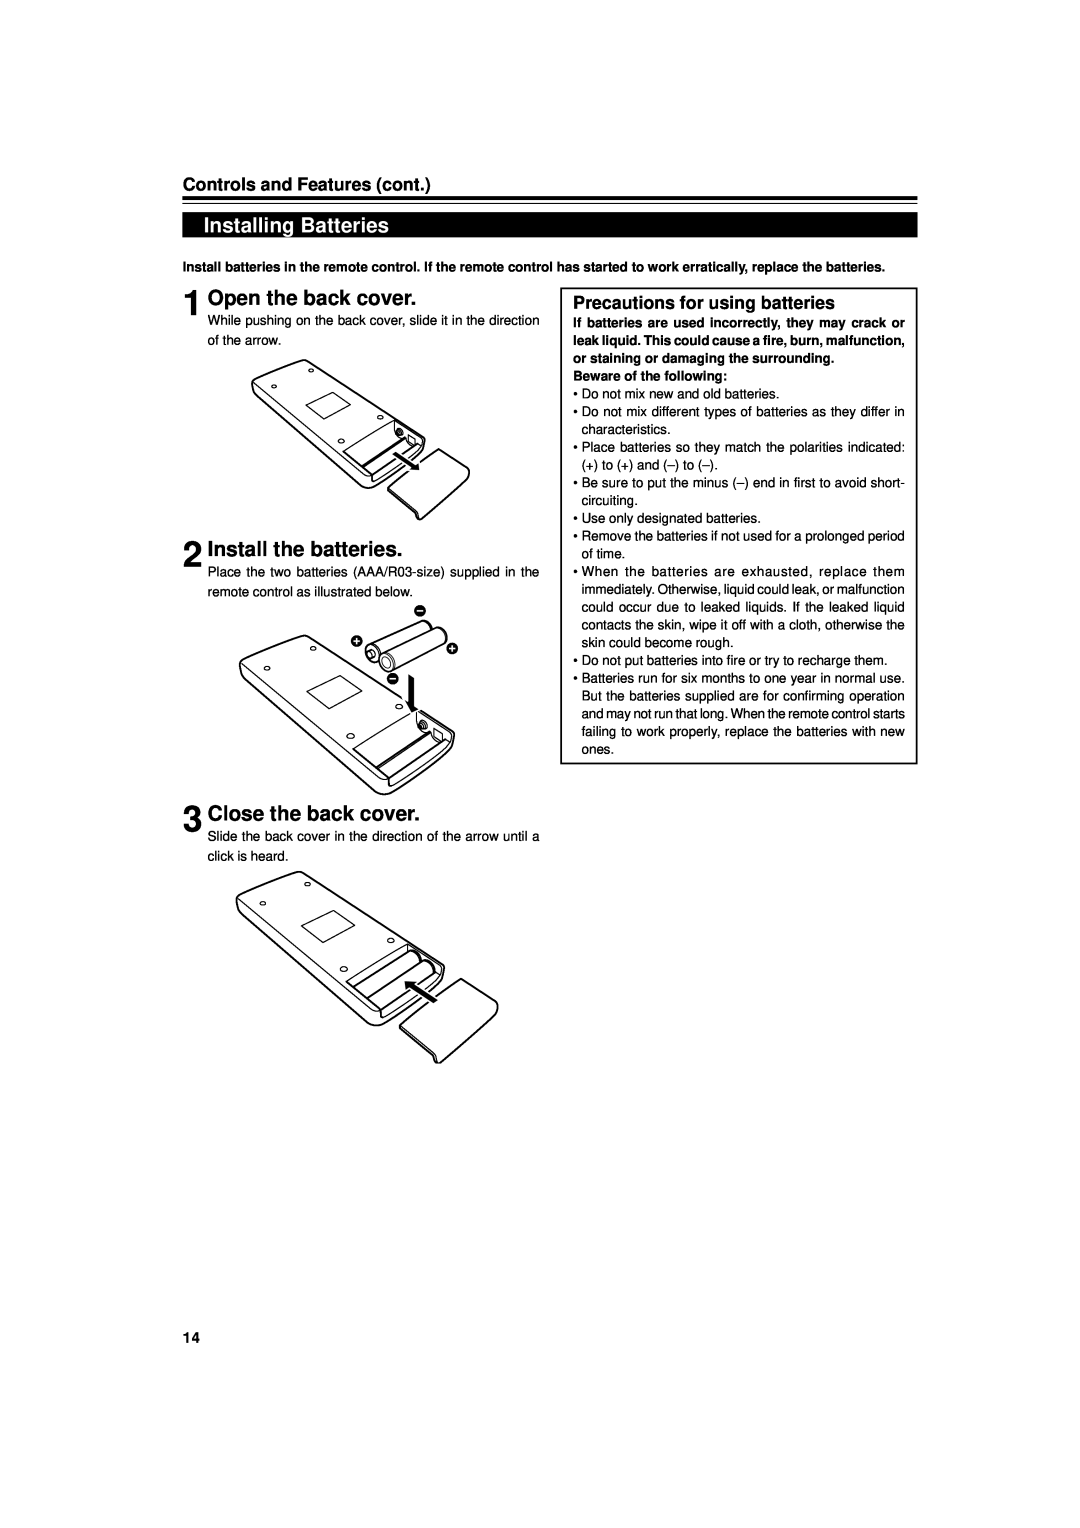 JVC DLA-G11U manual Installing Batteries, Open the back cover, Install the batteries, Close the back cover 